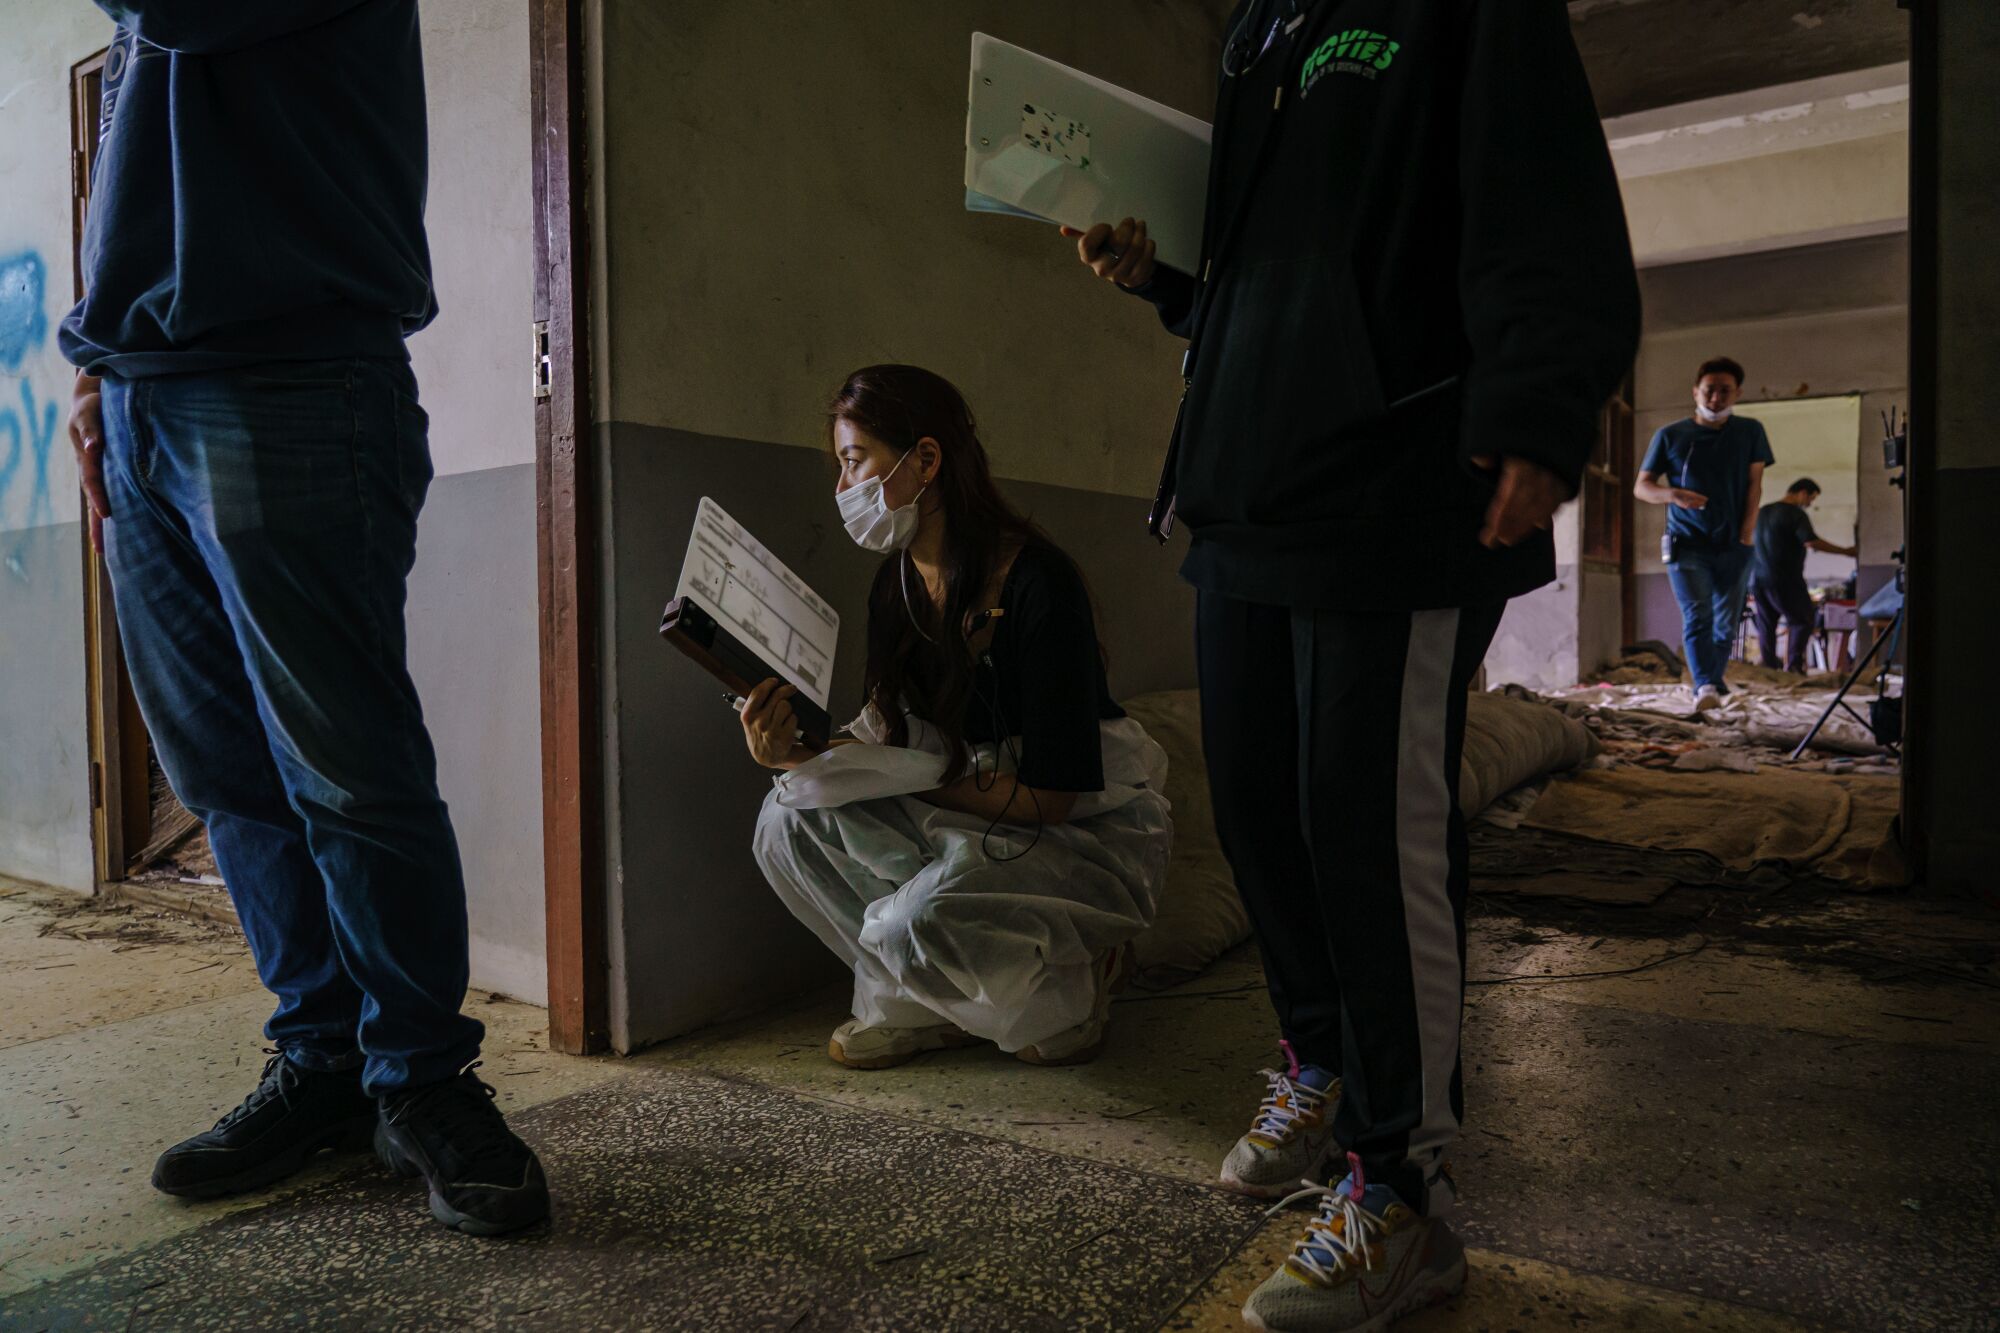 Slate operator Jieun Nam watches as the 'Tearless' film crew prepares to shoot.